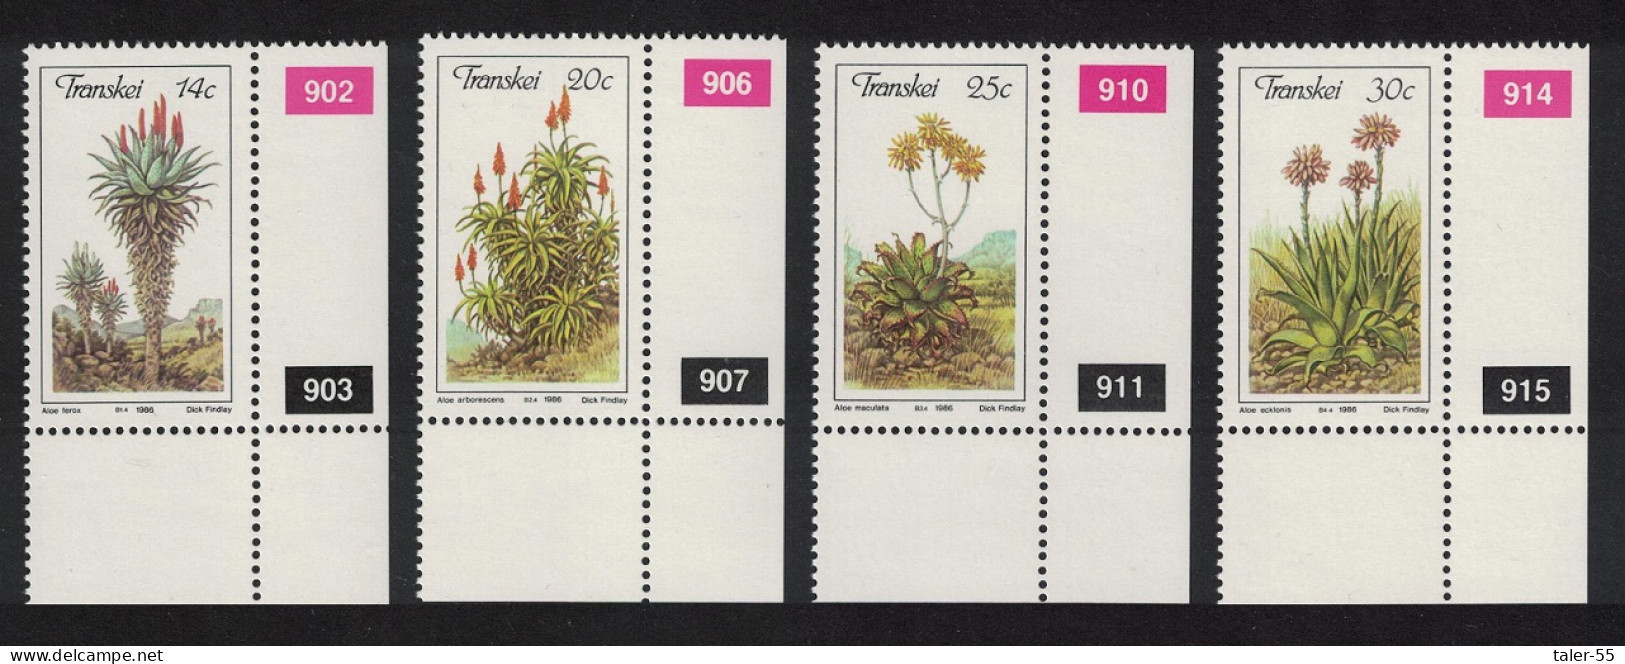 Transkei Aloes 4v Corners Date 1986 MNH SG#185-188 - Transkei